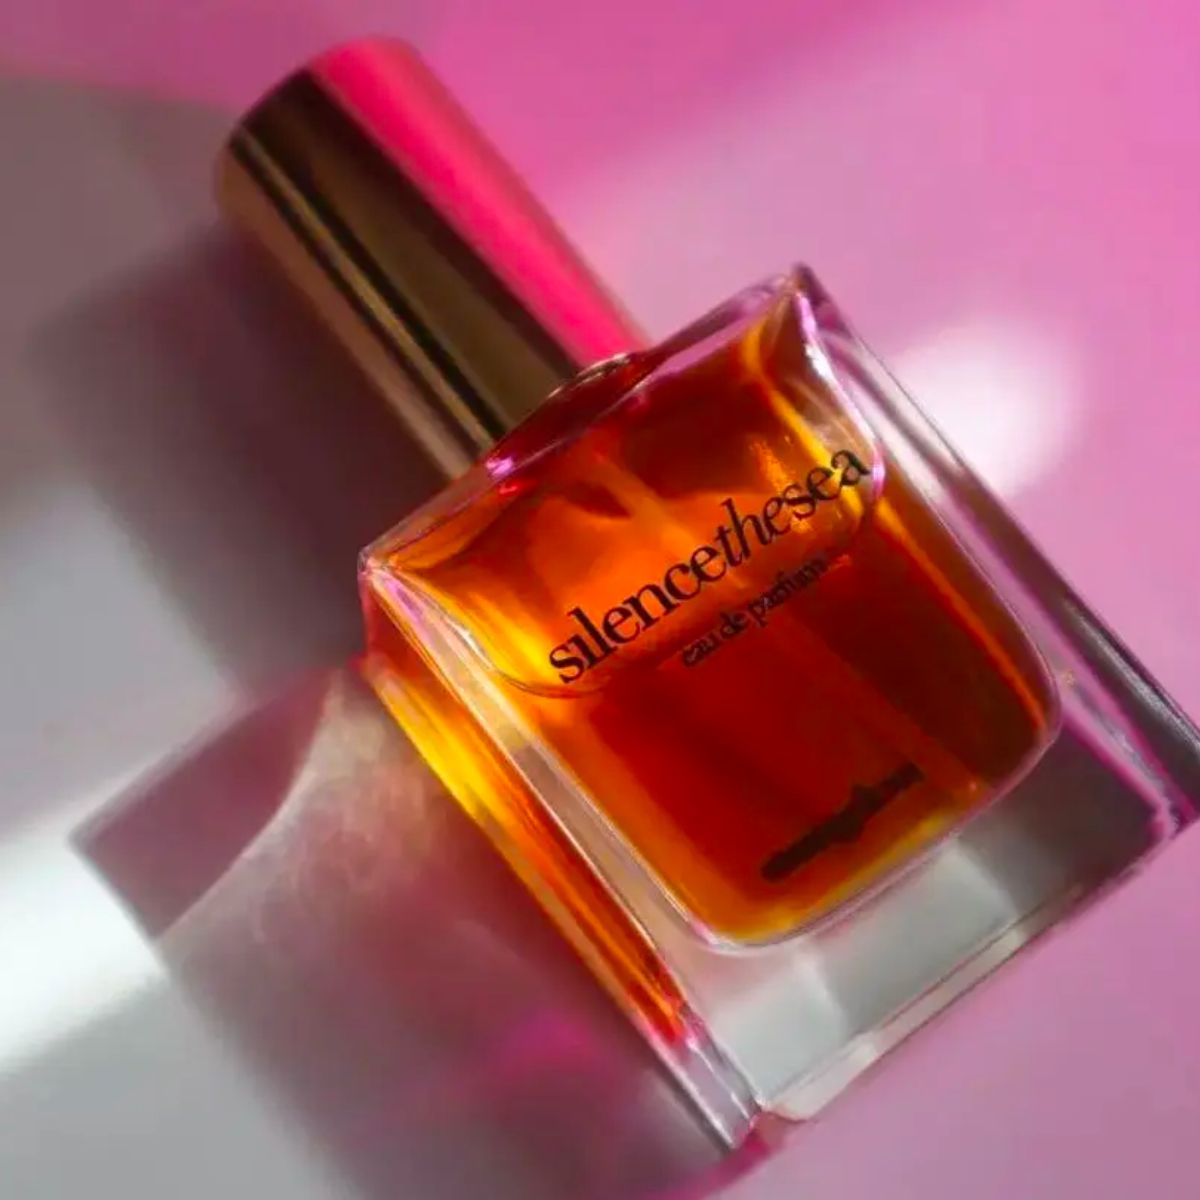 Strangelove NYC • Perfume Lounge • worldwide shipping